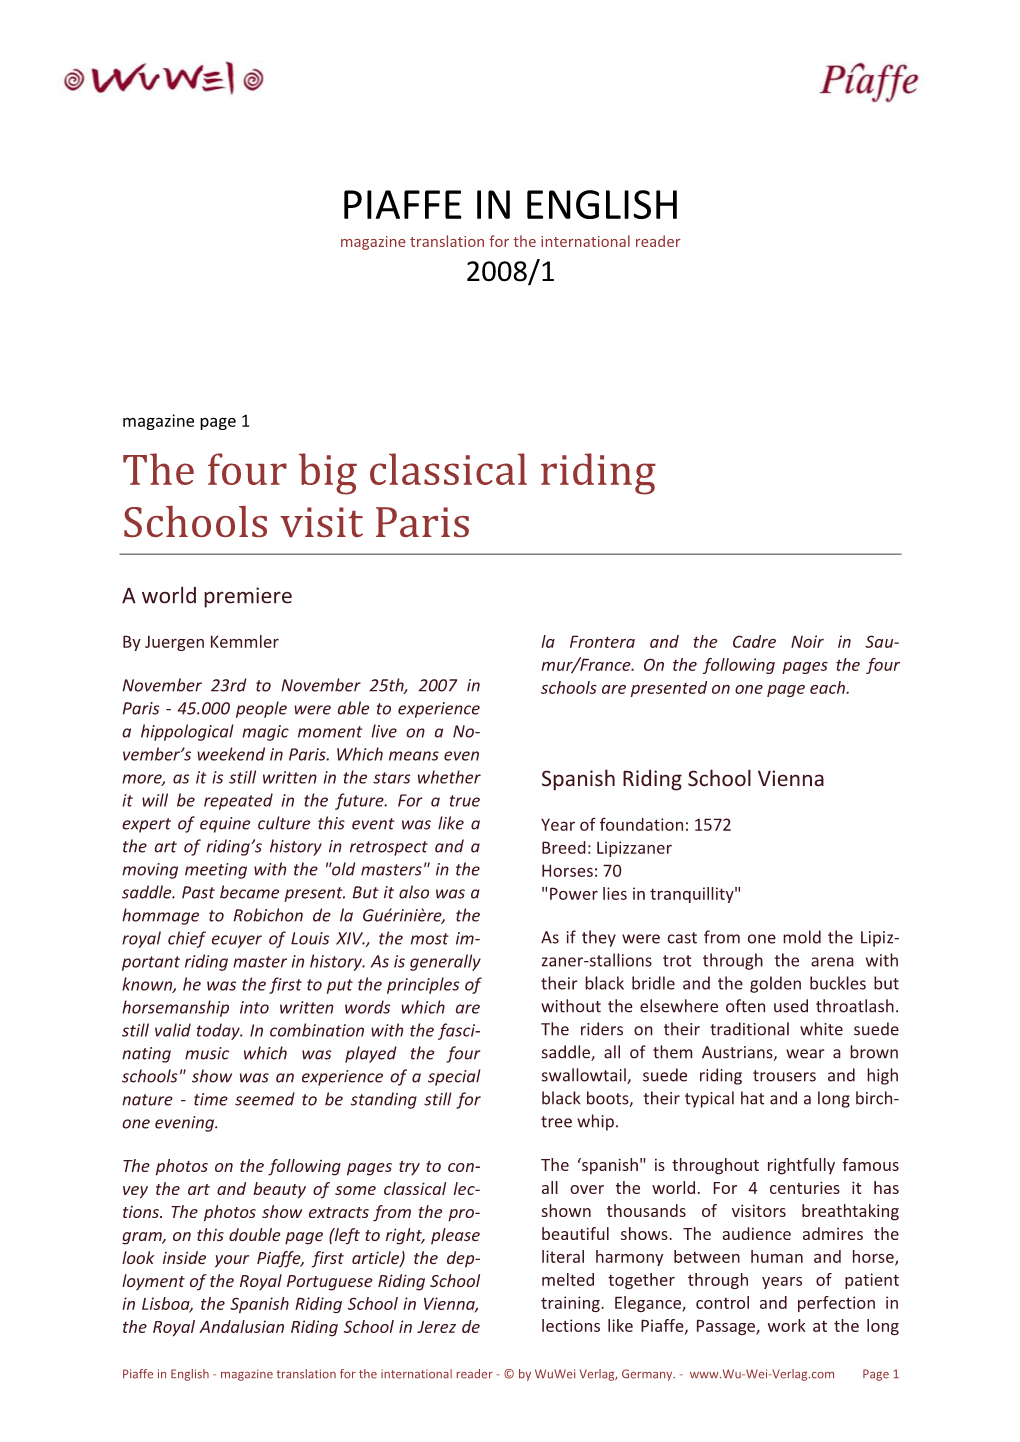 PIAFFE in ENGLISH the Four Big Classical Riding Schools Visit Paris